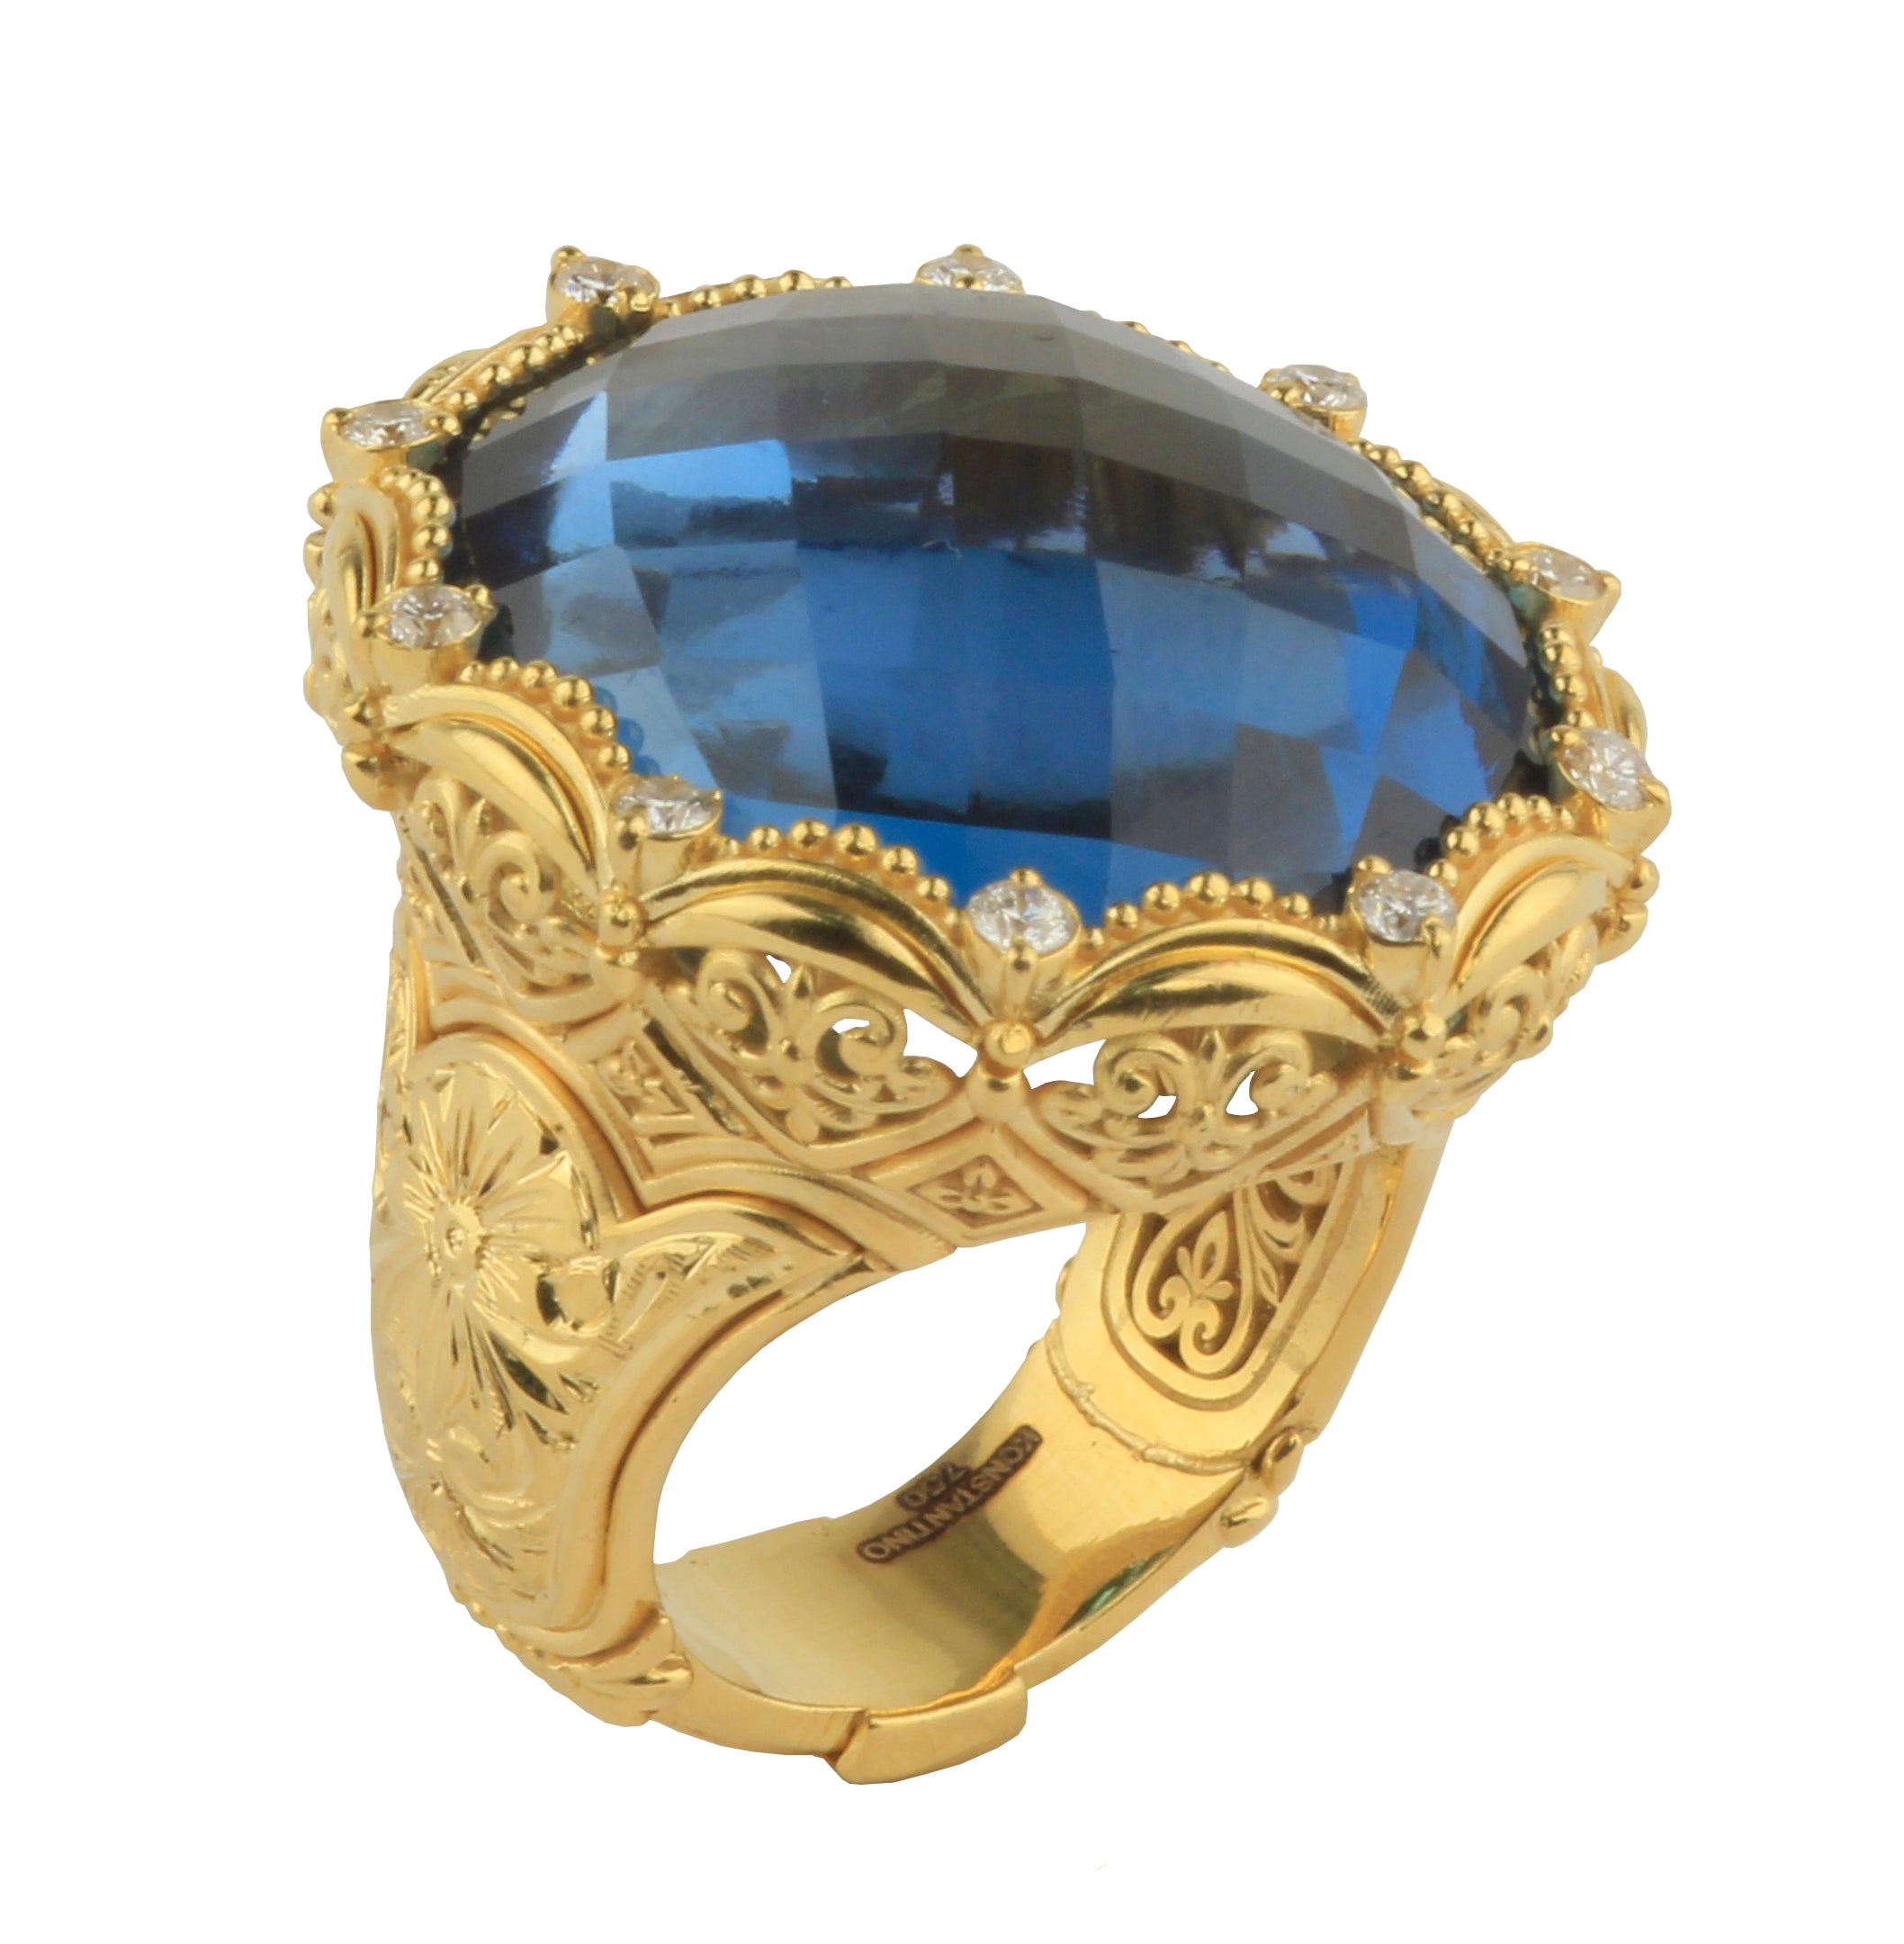 KONSTANTINO 18K GOLD (15.0GR +/-) LONDON BLUE TOPAZ (38.0CT +/-) DIAMOND (0.35CT +/-) RING FROM THE